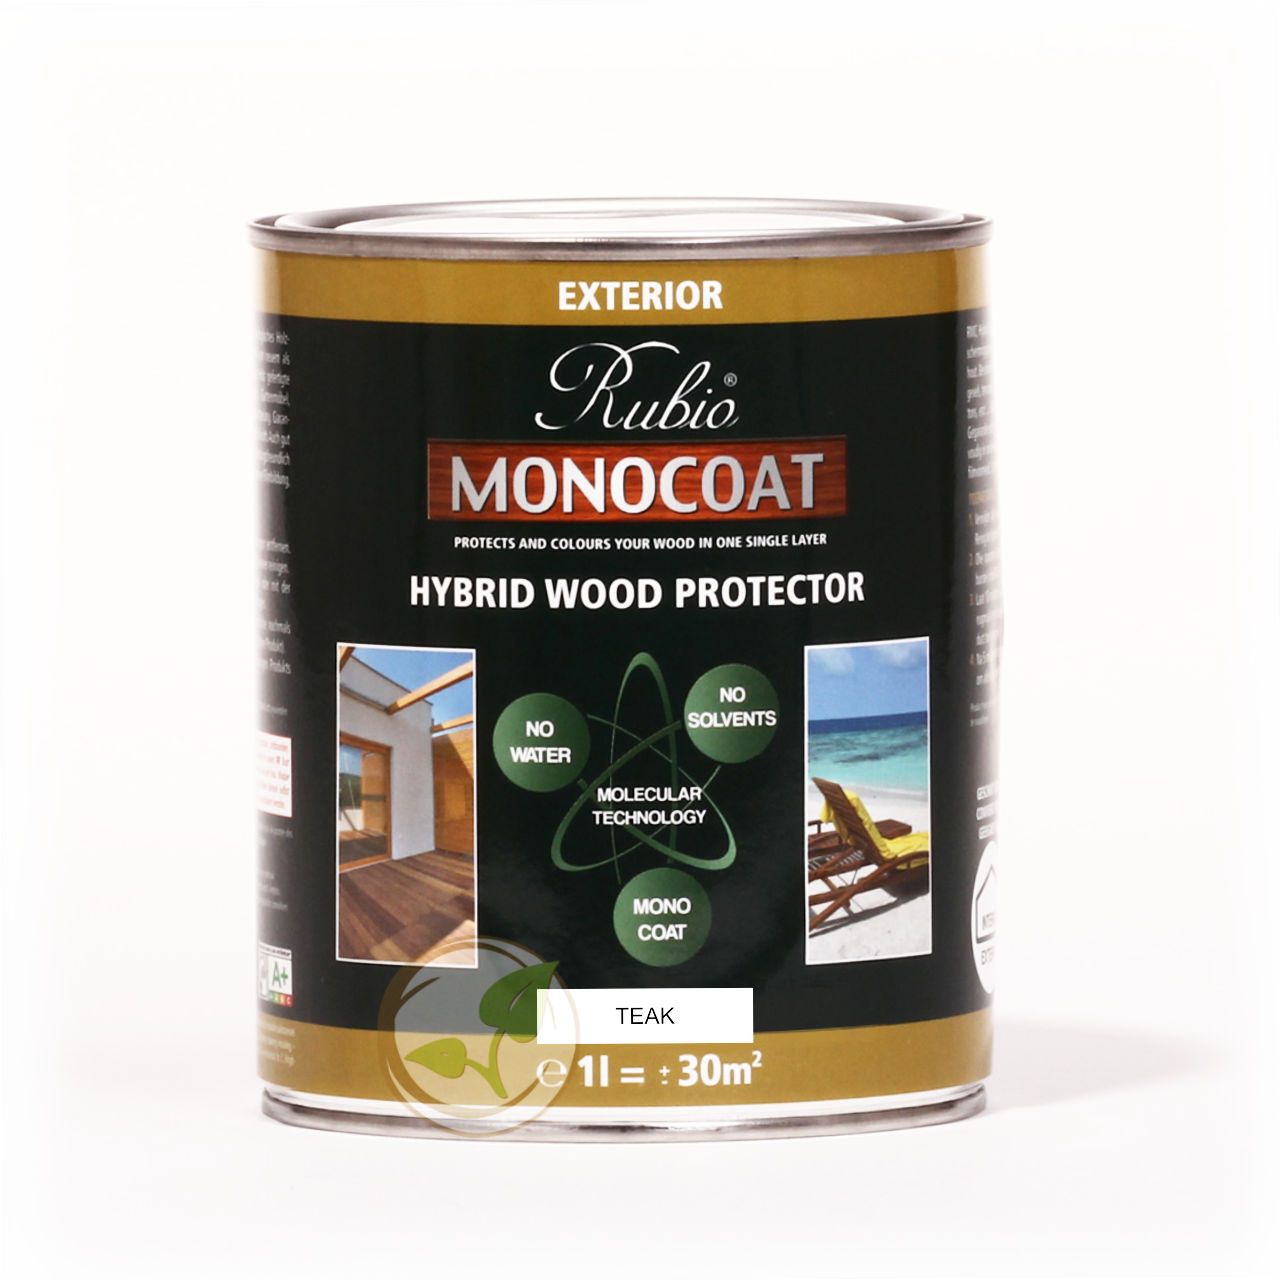 rubio-monocoat-exterior-hybrid-wood-protector-teak-1lBSLxCwwe0gj6y